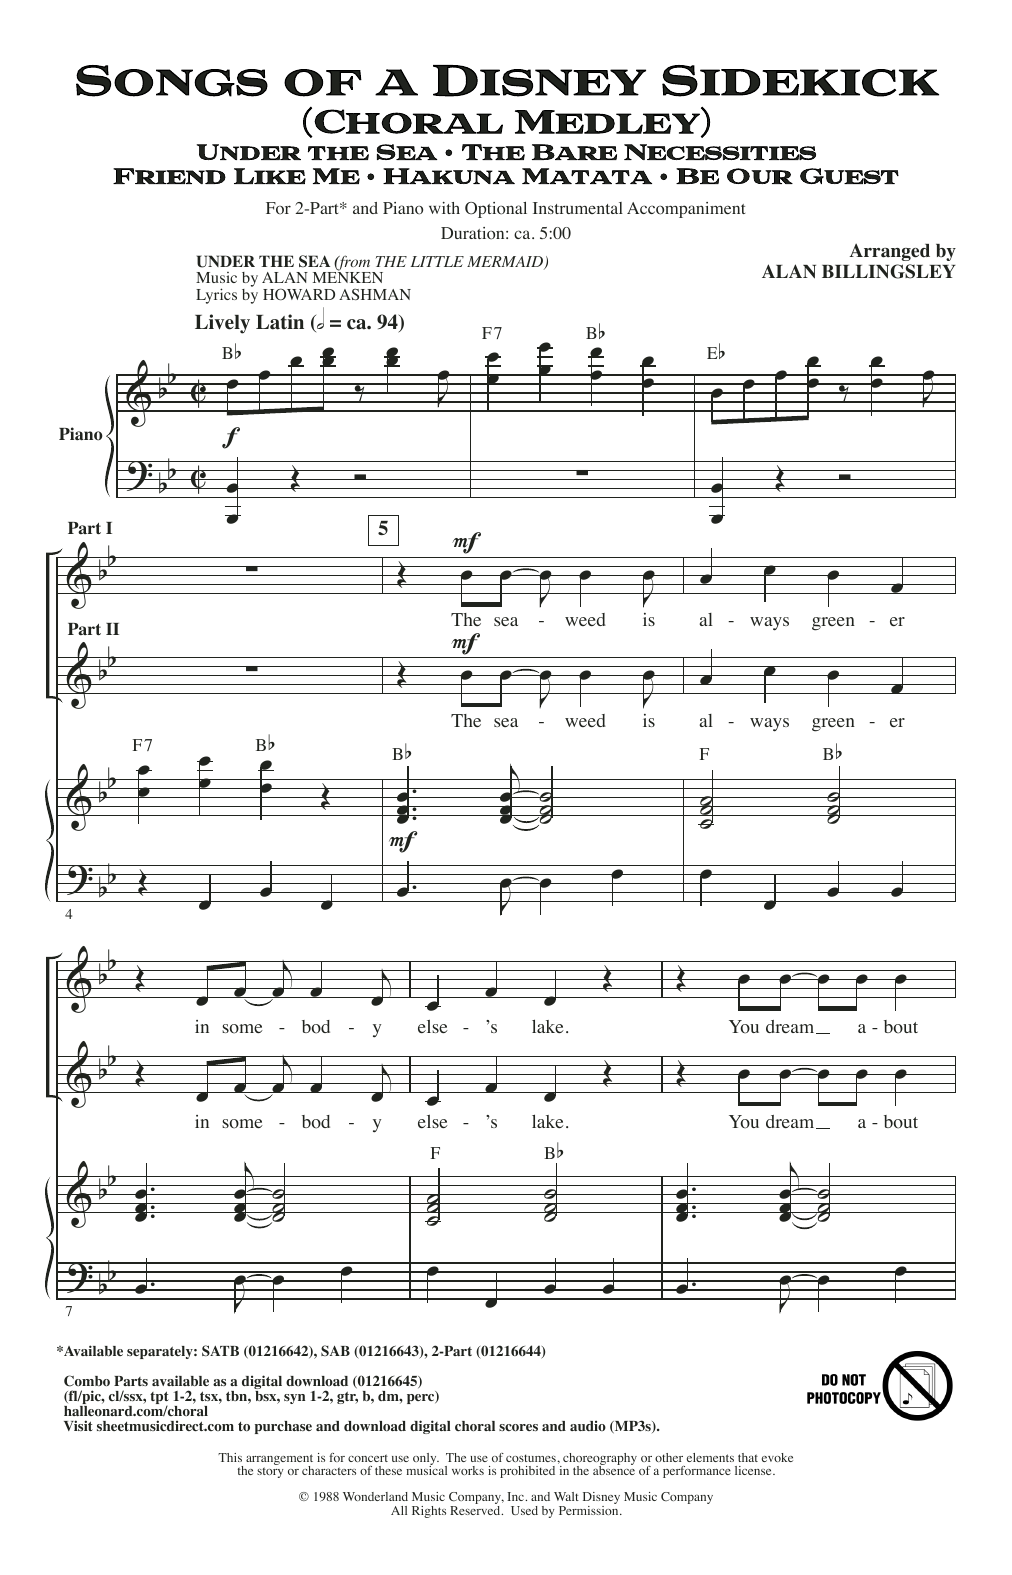 Alan Billingsley Songs of a Disney Sidekick (Choral Medley) Sheet Music Notes & Chords for SAB Choir - Download or Print PDF